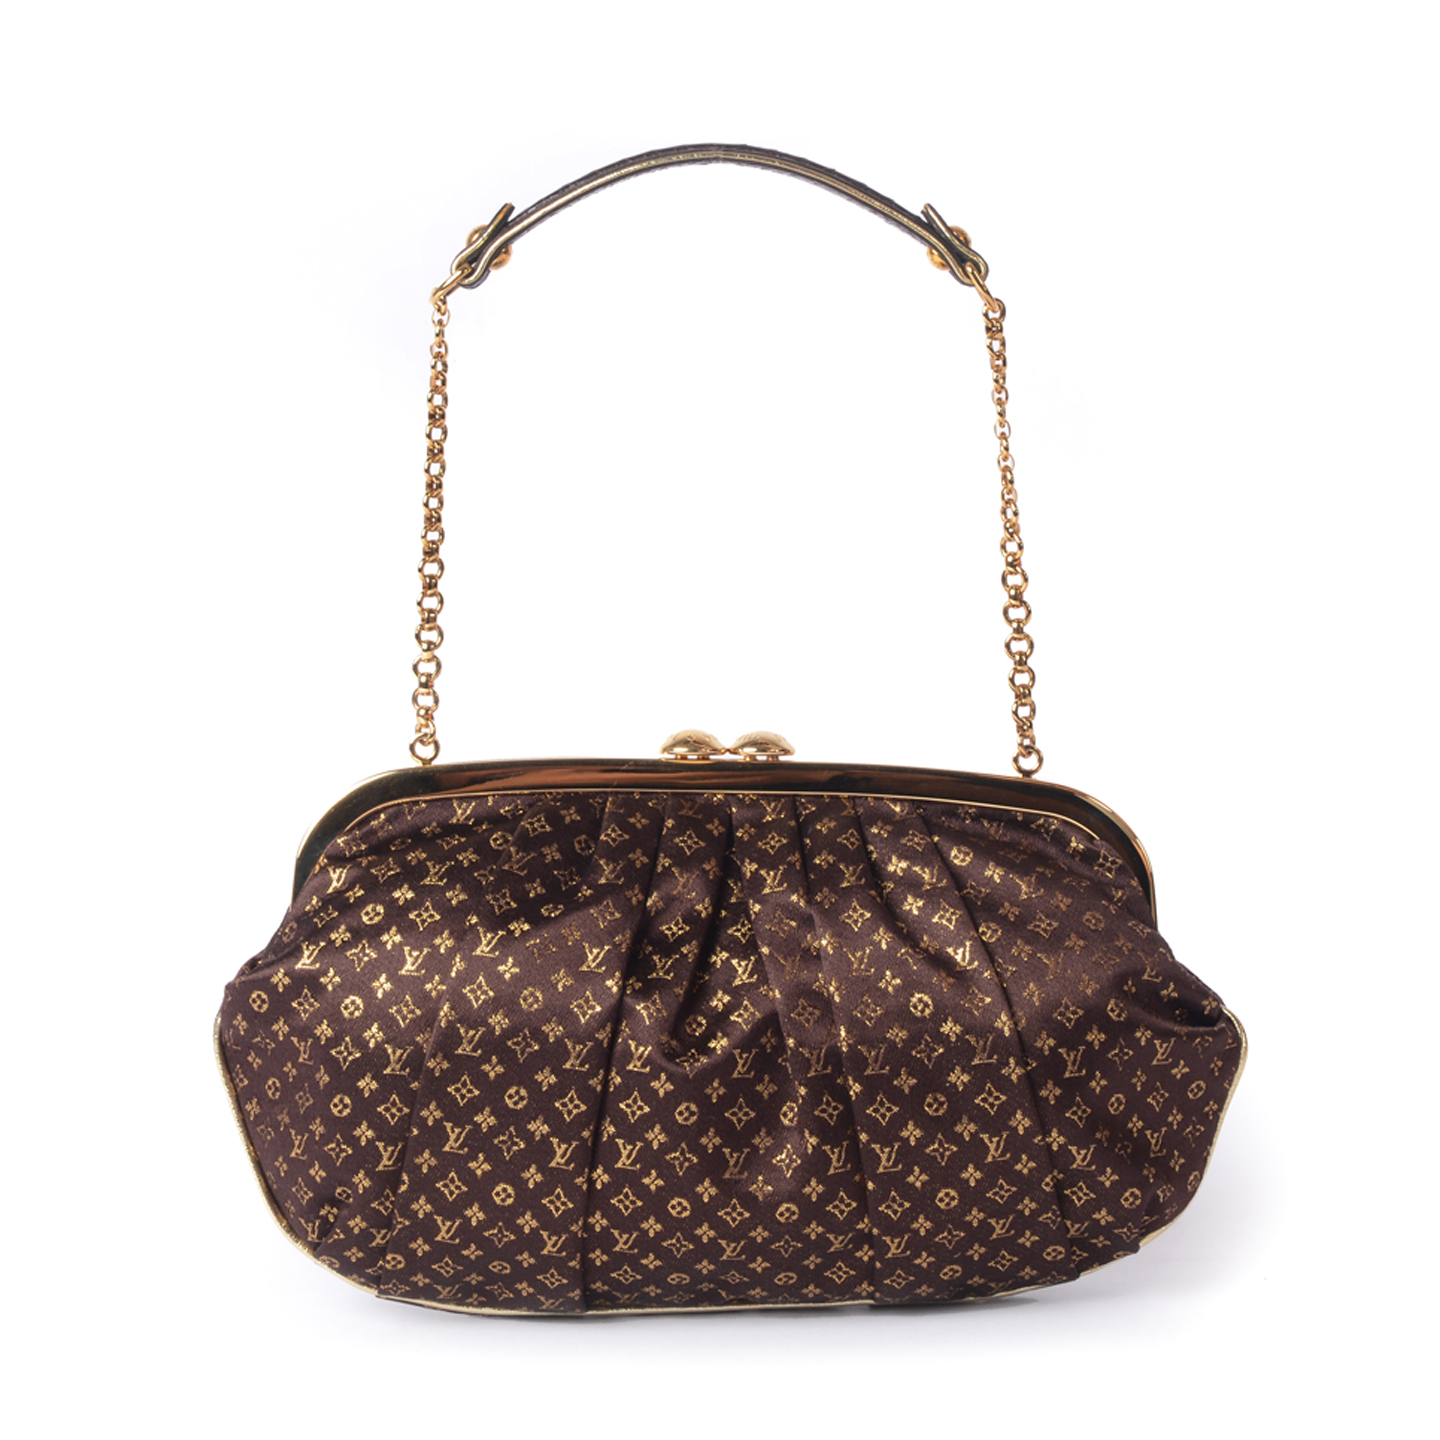 Louis Vuitton Satin Clutch Handbags